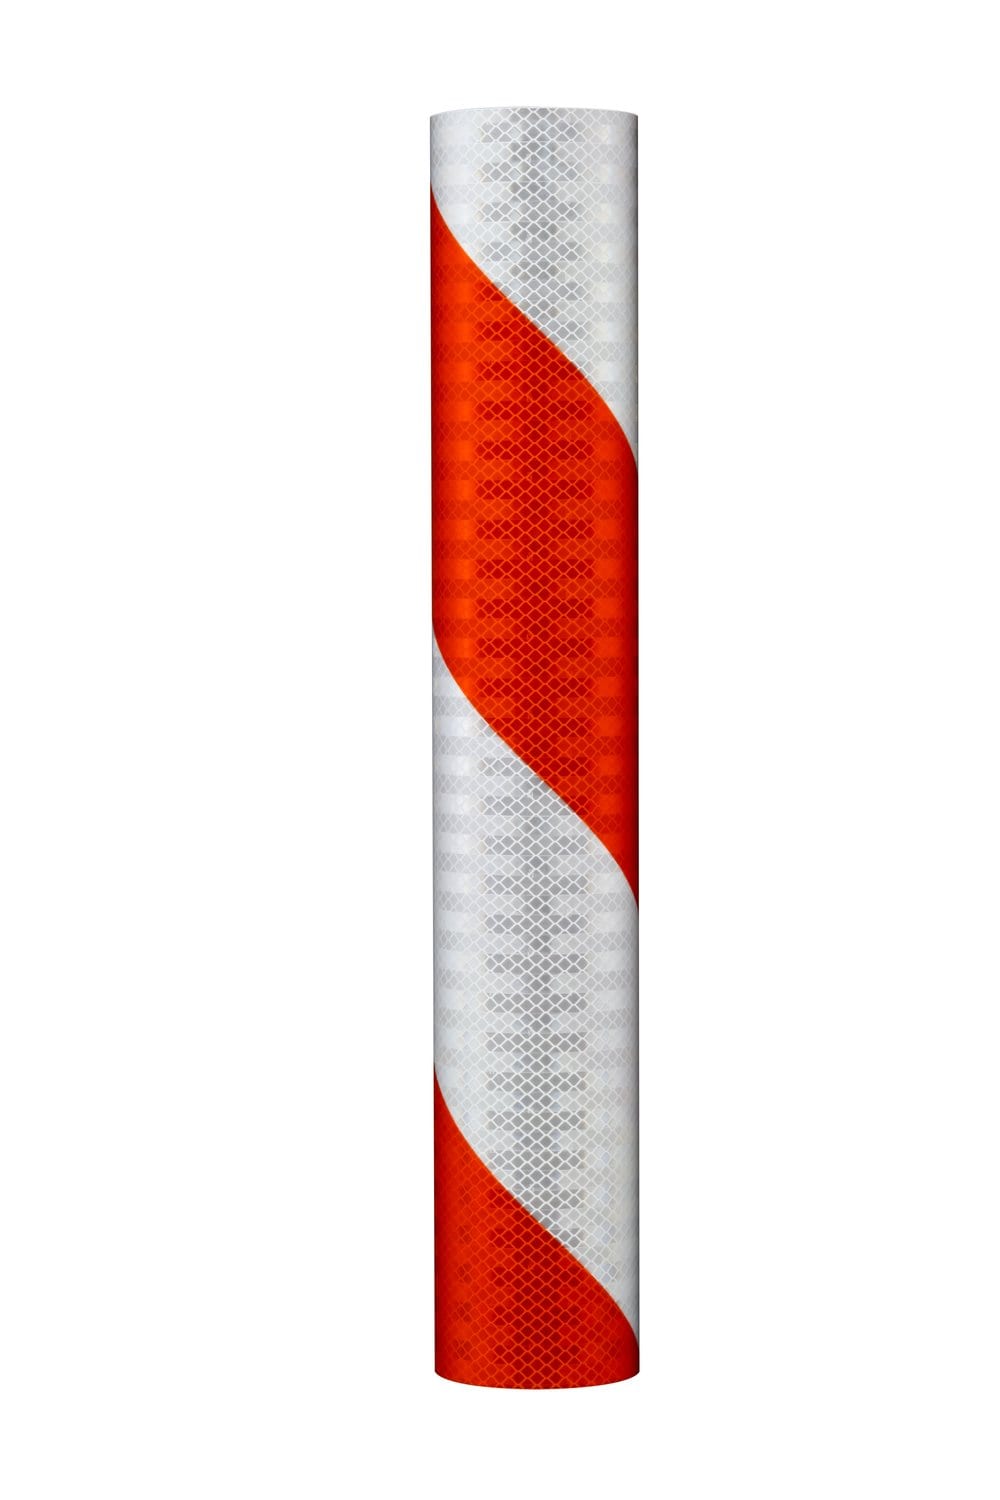 7010304568 - 3M Flexible Prismatic Reflective Barricade Sheeting 3334L Orange/White,
4 in stripe/left, 8 in x 50 yd